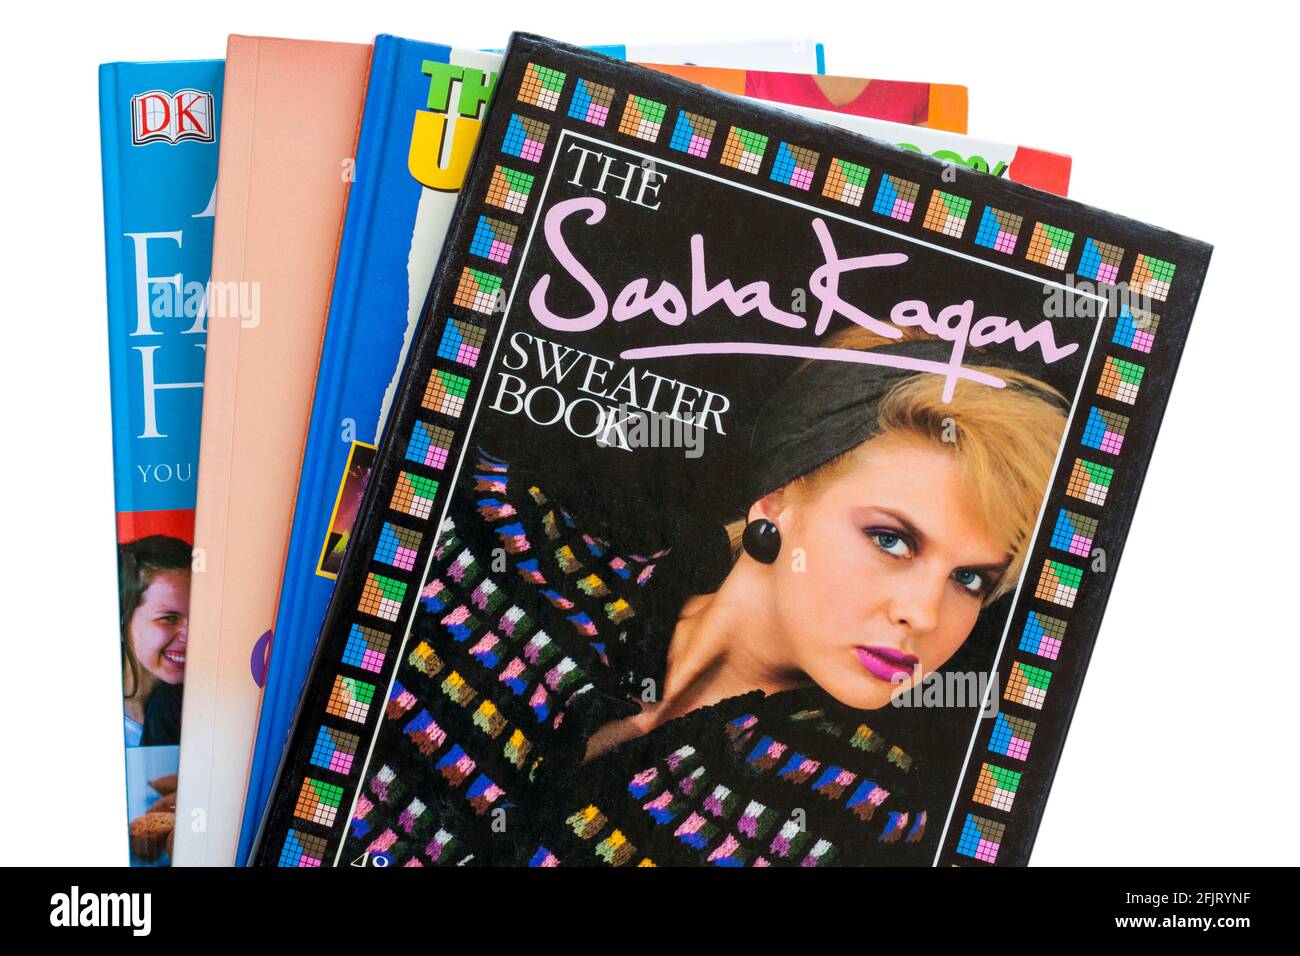 Pile of books with The Sasha Kagan Sweater Book on top set on white background Stock Photo